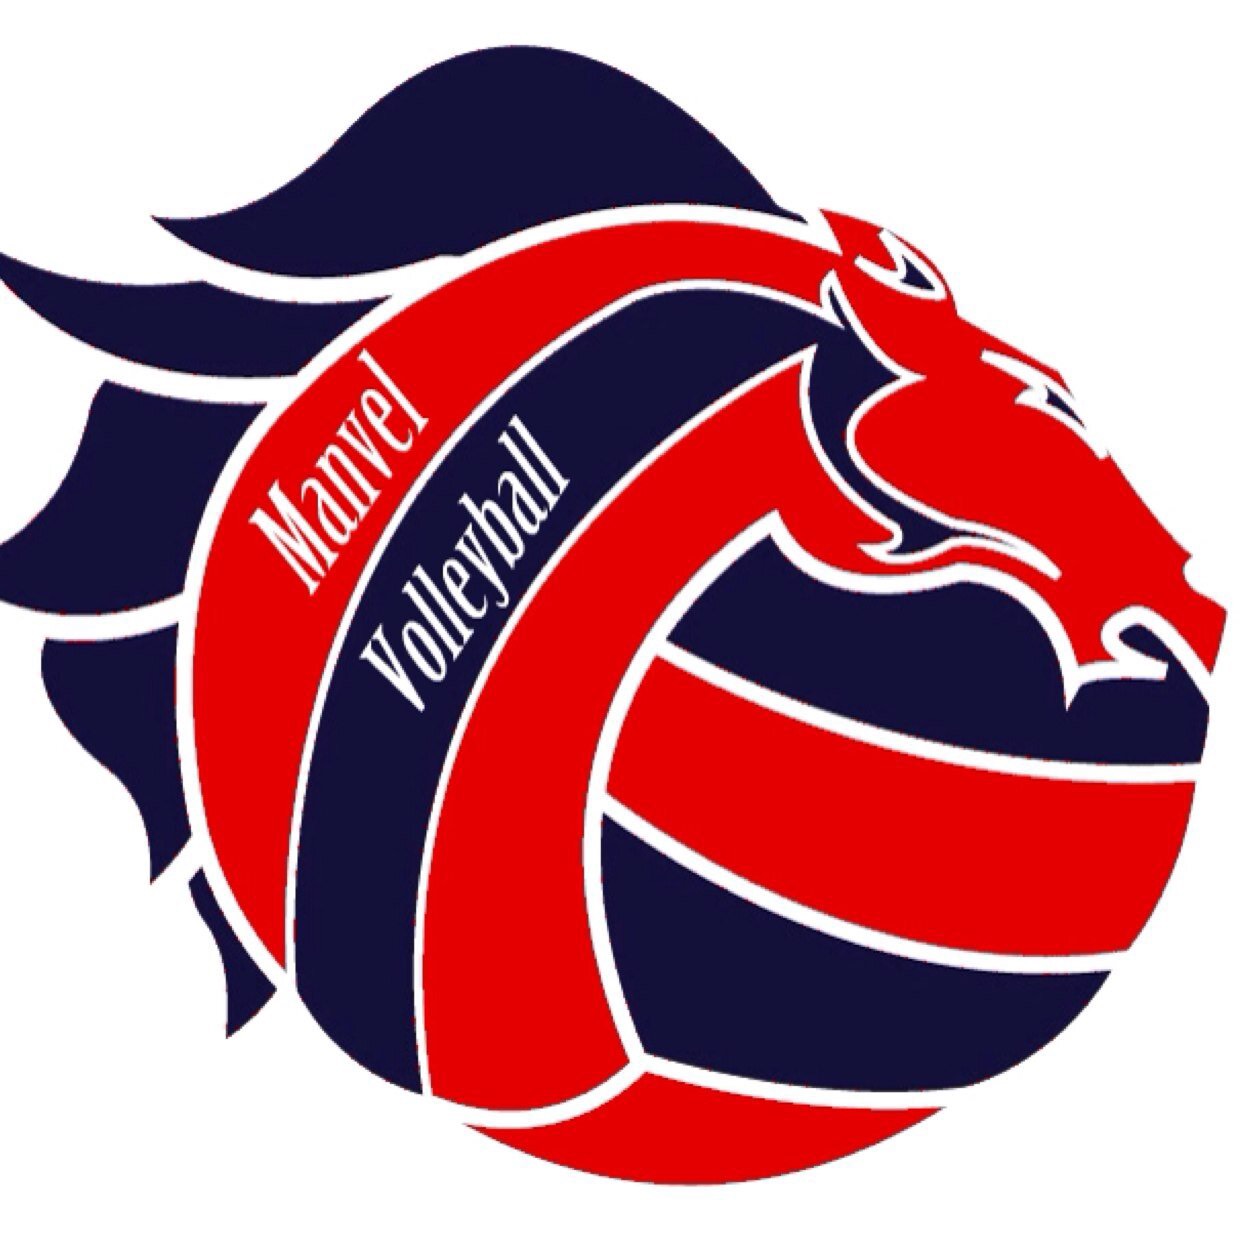 Manvel Volleyball logo